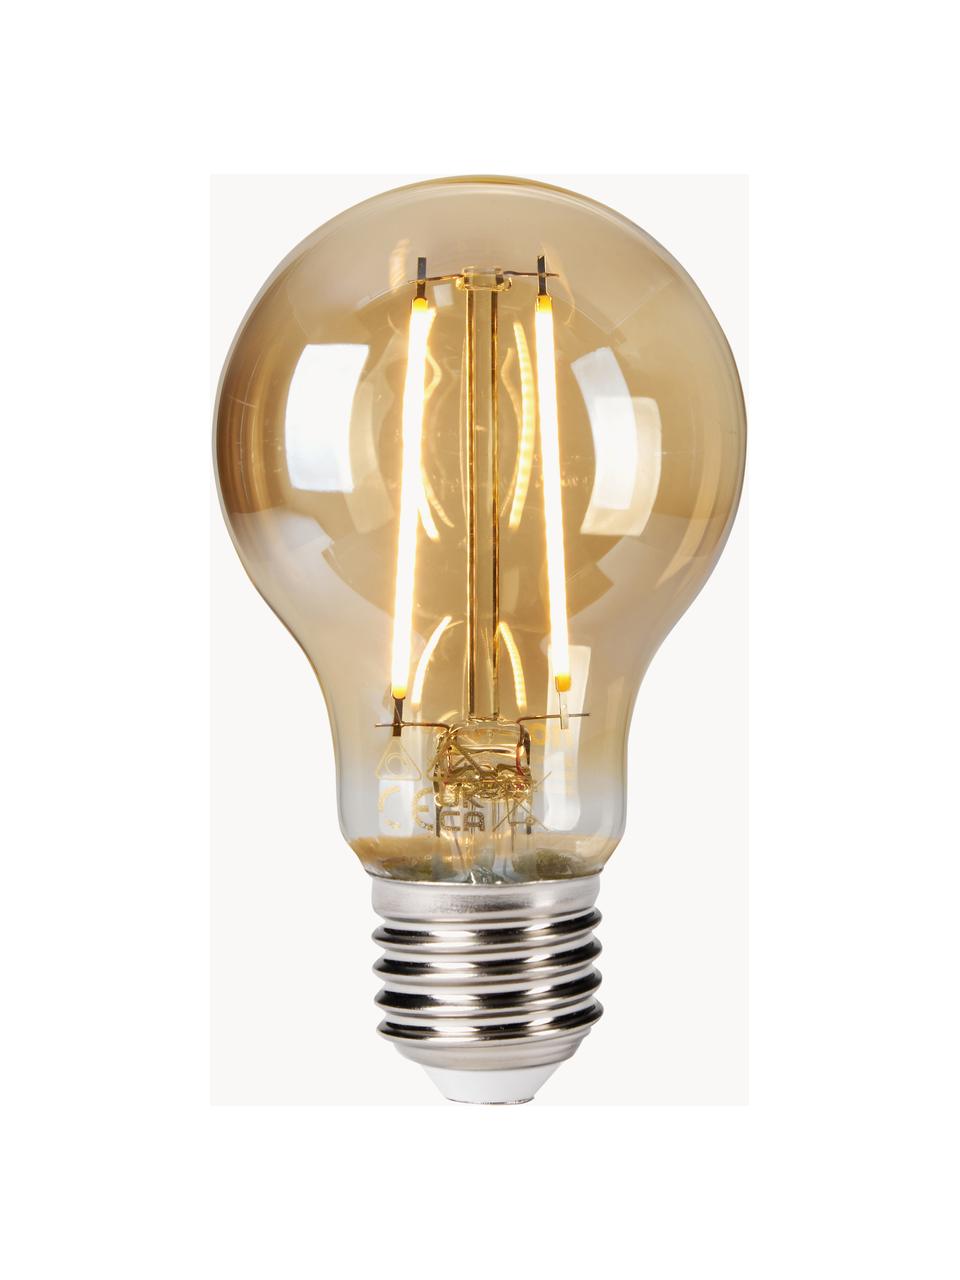 Žárovka E27, teplá bílá, 7 ks, Transparentní, zlatá, Ø 6 cm, V 10 cm